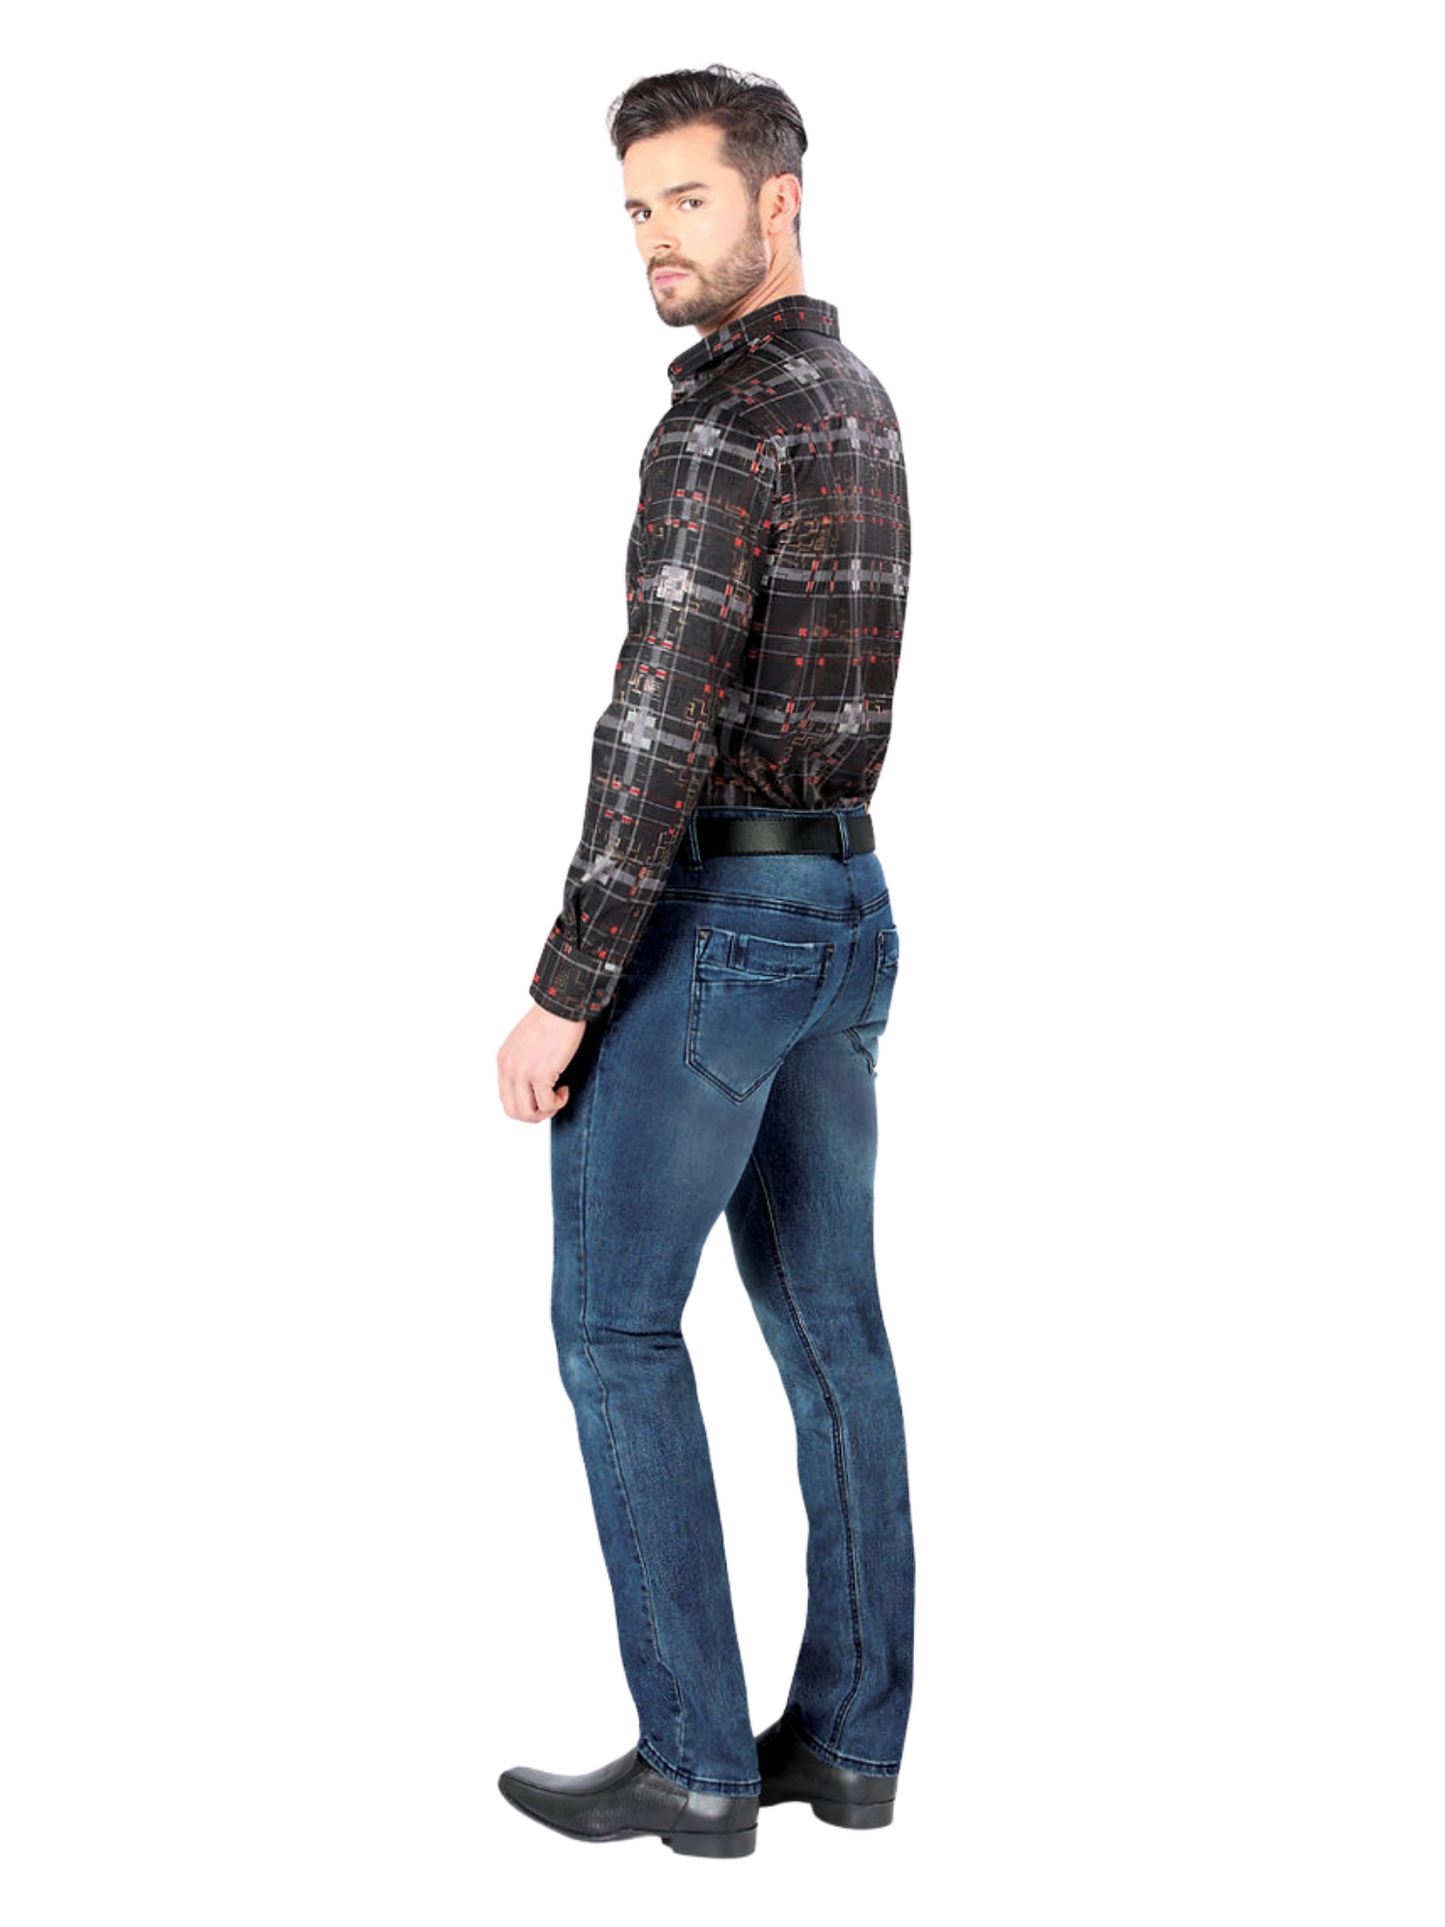 Stretch Denim Jeans for Men 'Montero' - ID: 5302 Denim Jeans Montero